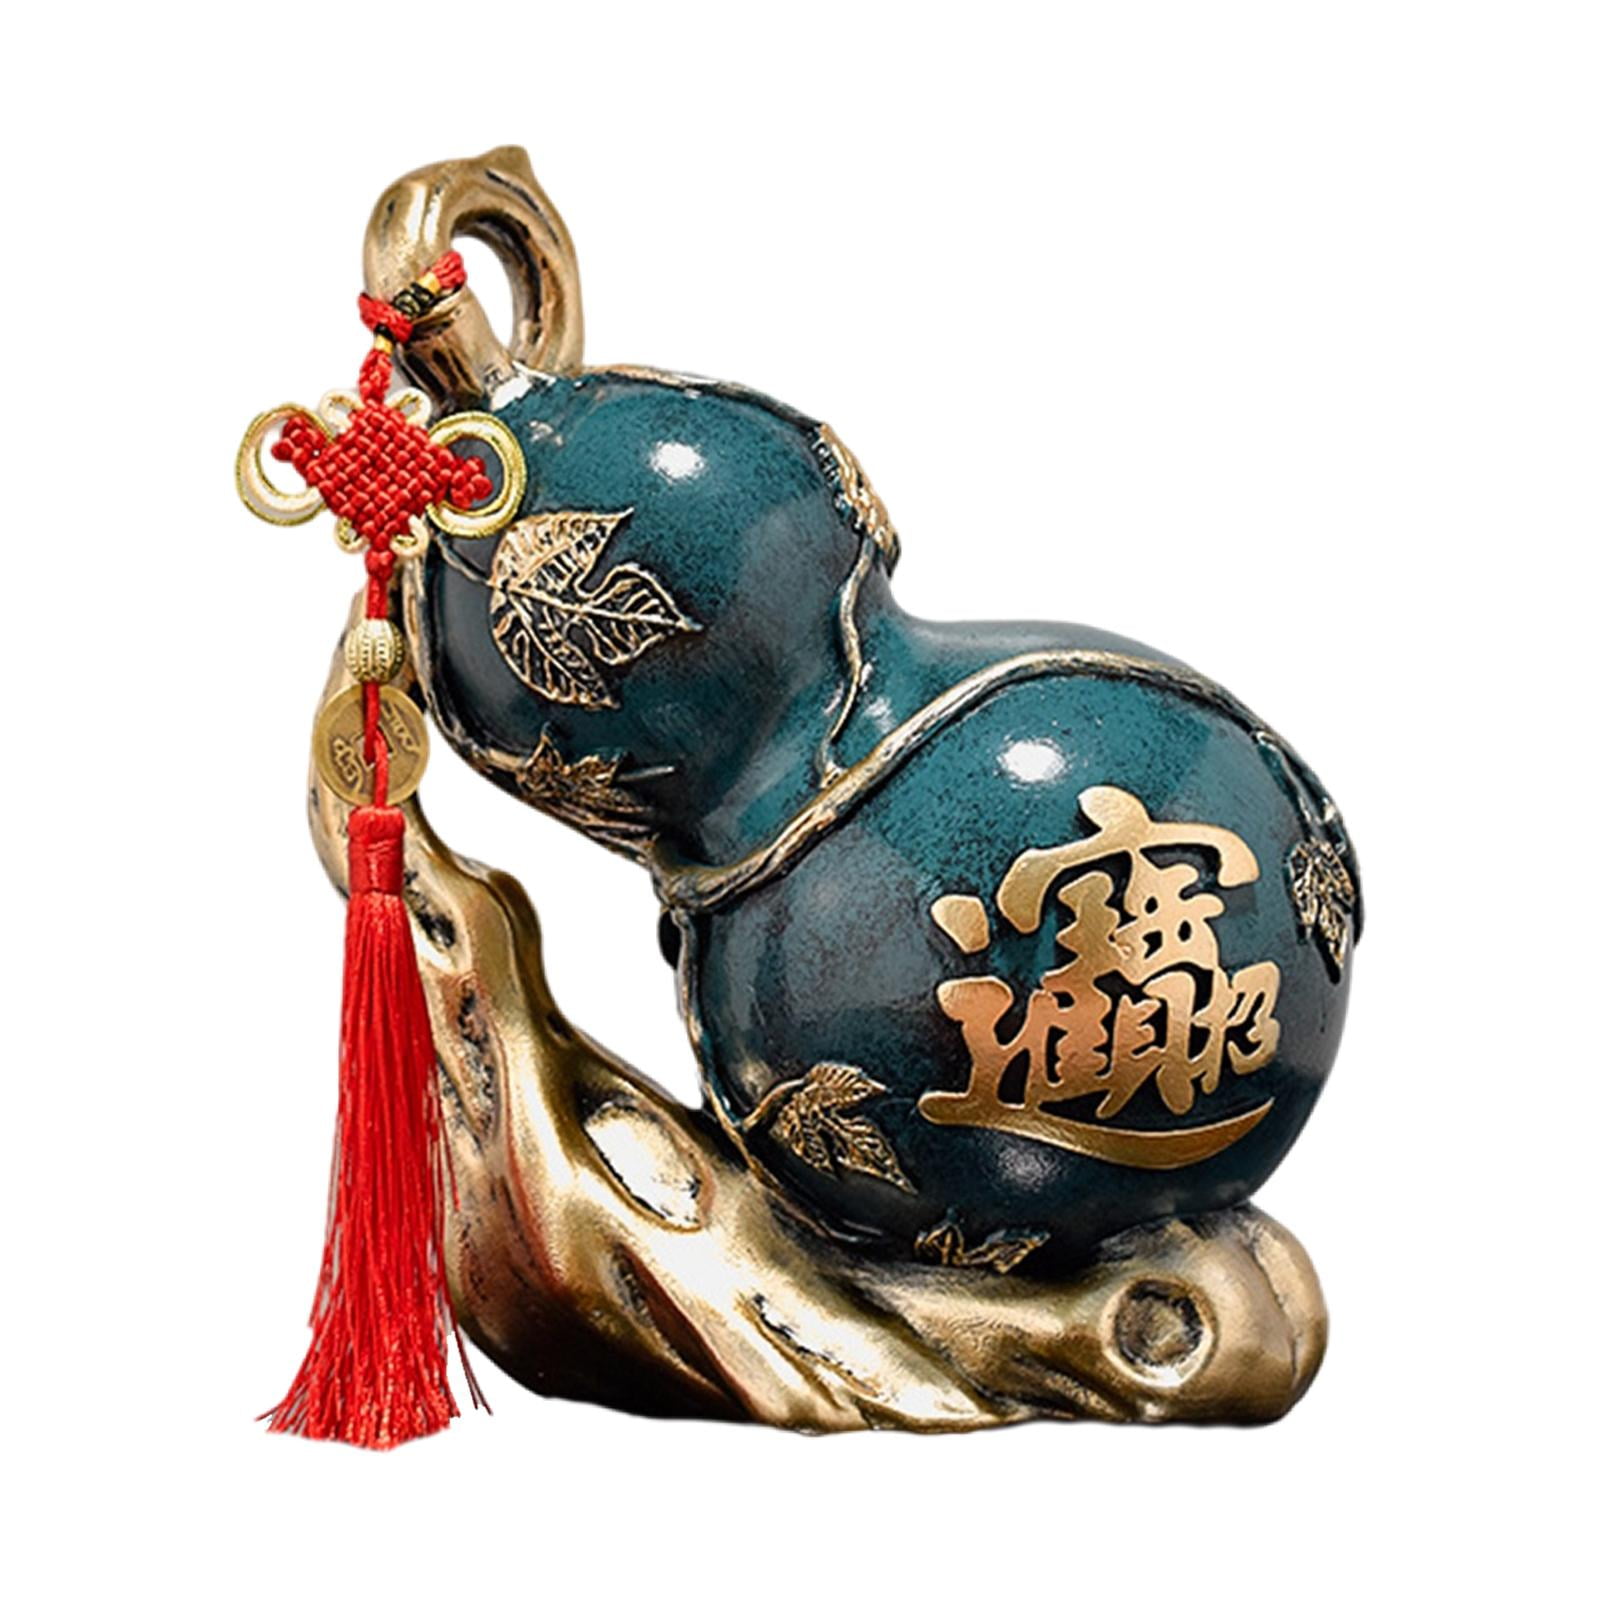  Feng Shui Statue Handgefertigte Tierkreis-Kaninchen-Ornamente,  Polygone, Skulptur, dekorativ, Feng Shui, Reichtum, Wohlstand Feng Shui  Dekoration (Size : S)